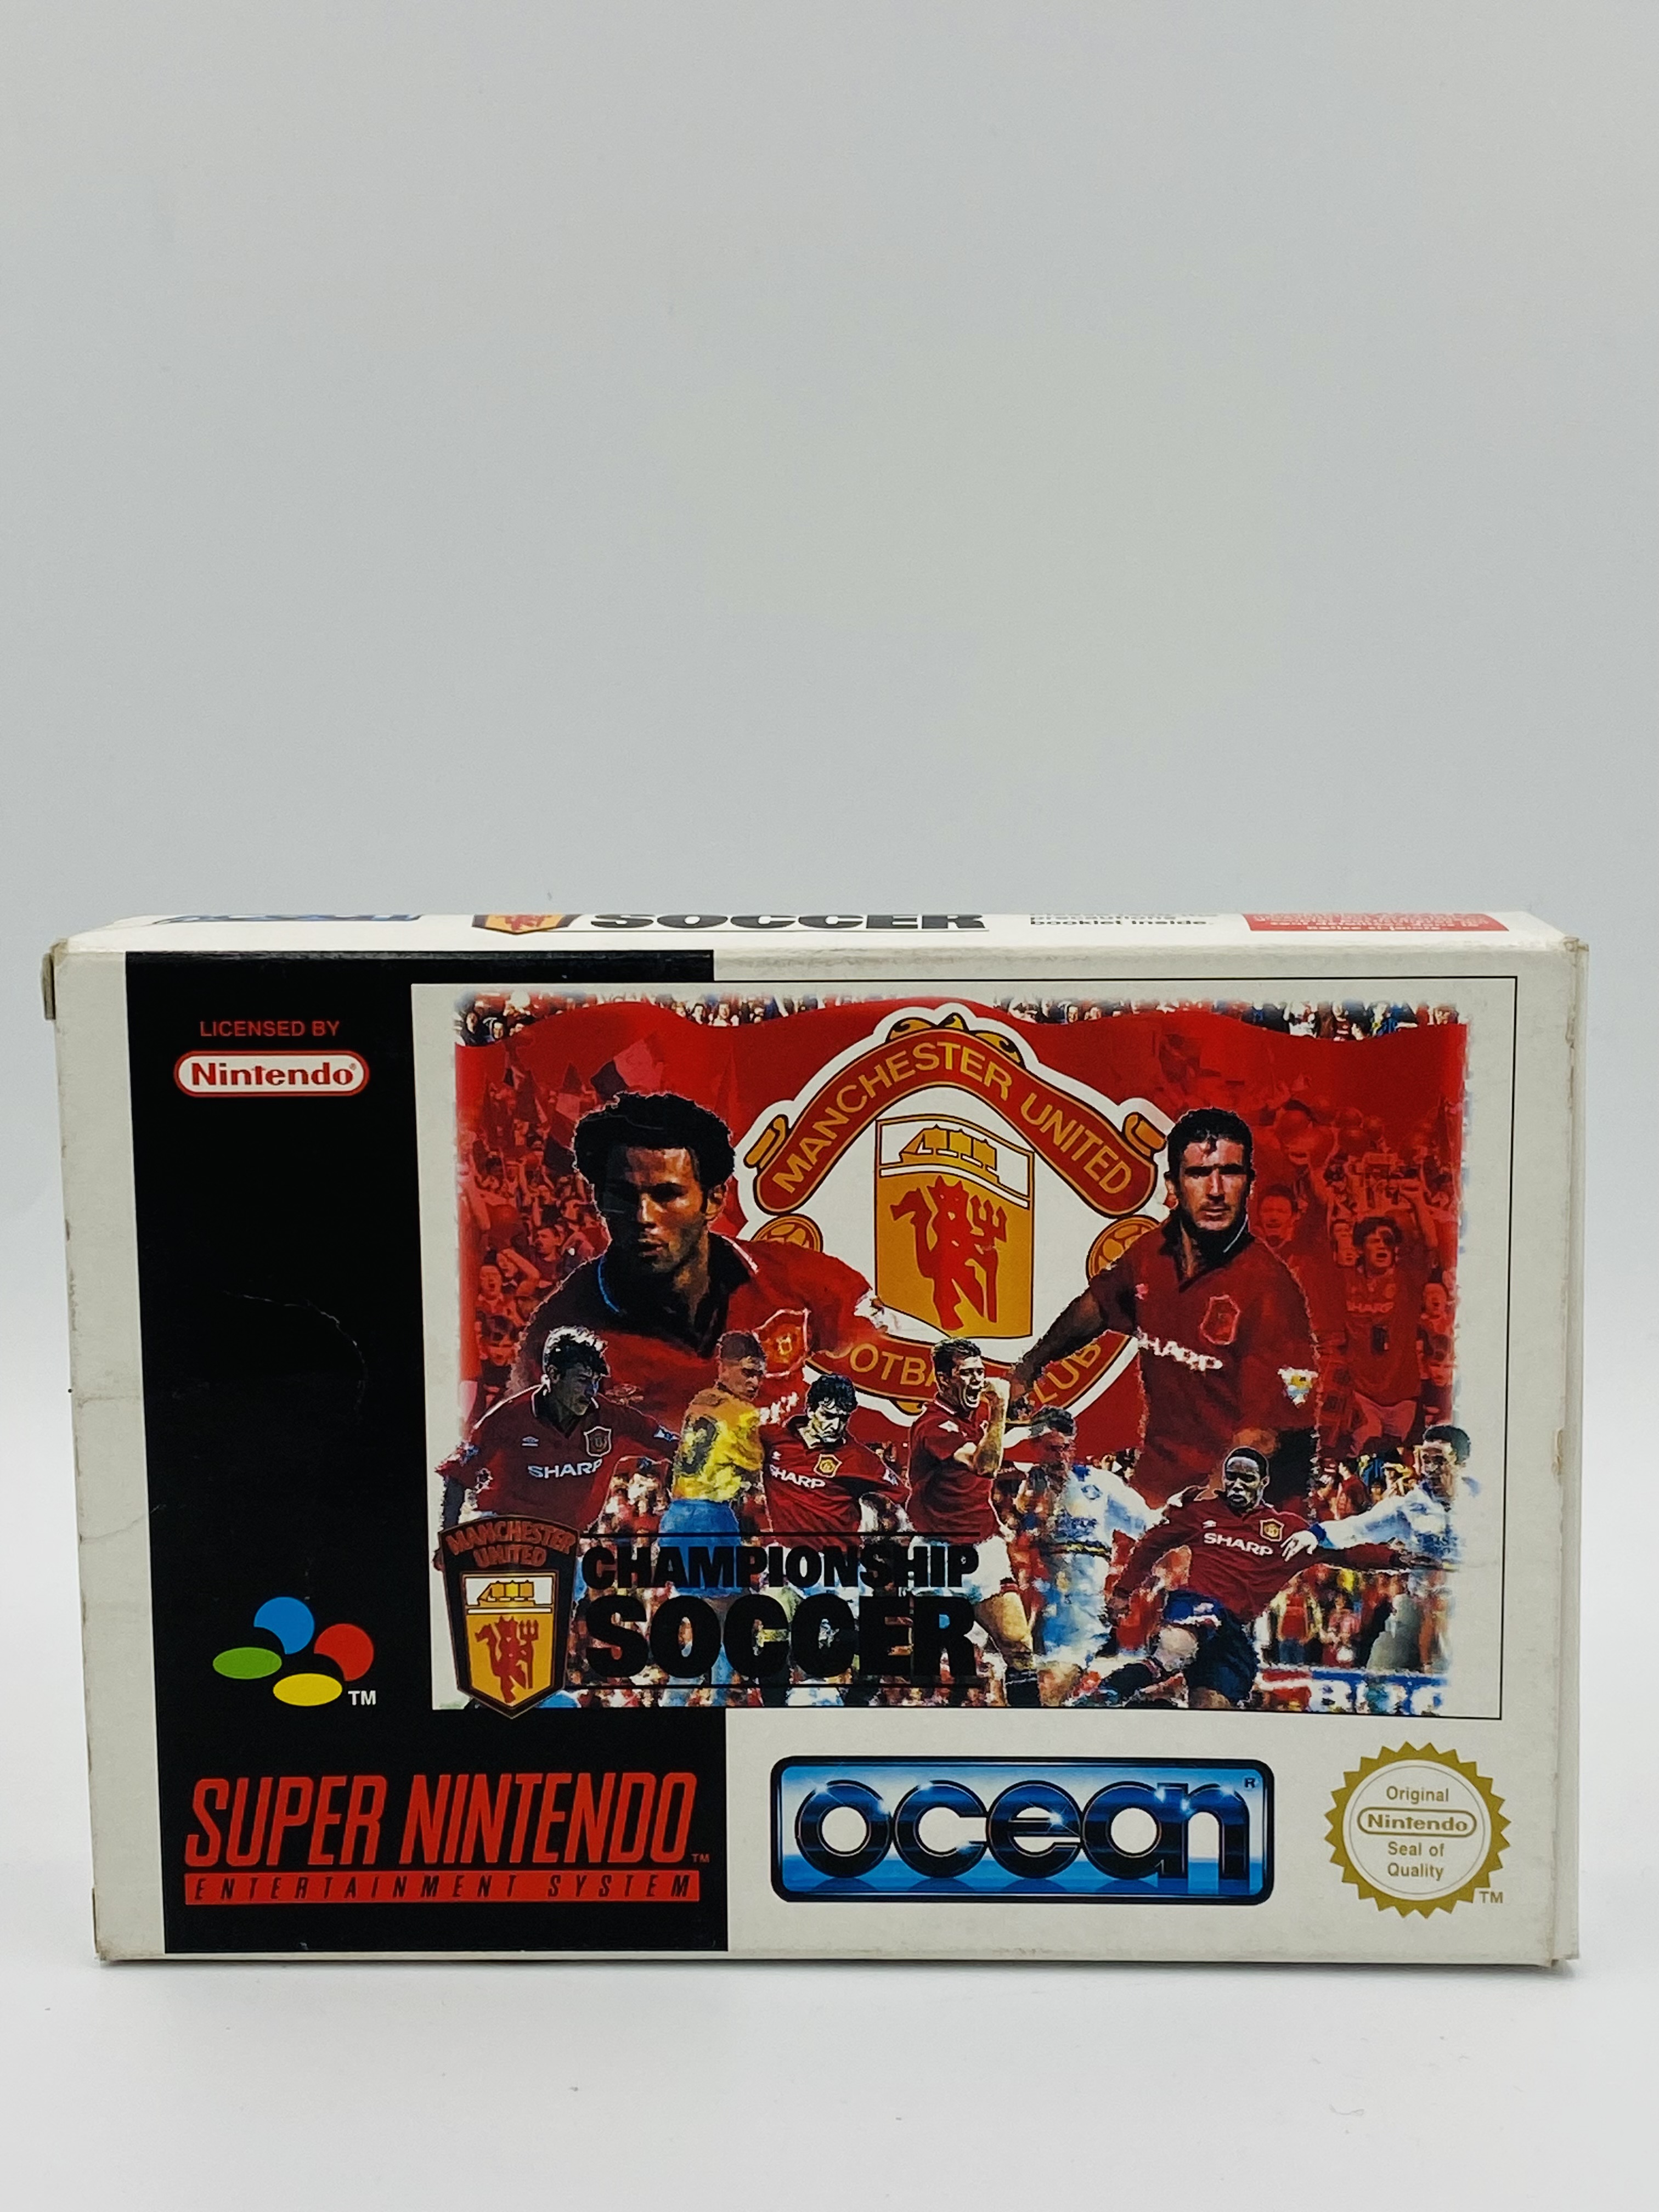 Ocean Super Nintendo Entertainment System Manchester United Championship Soccer, boxed